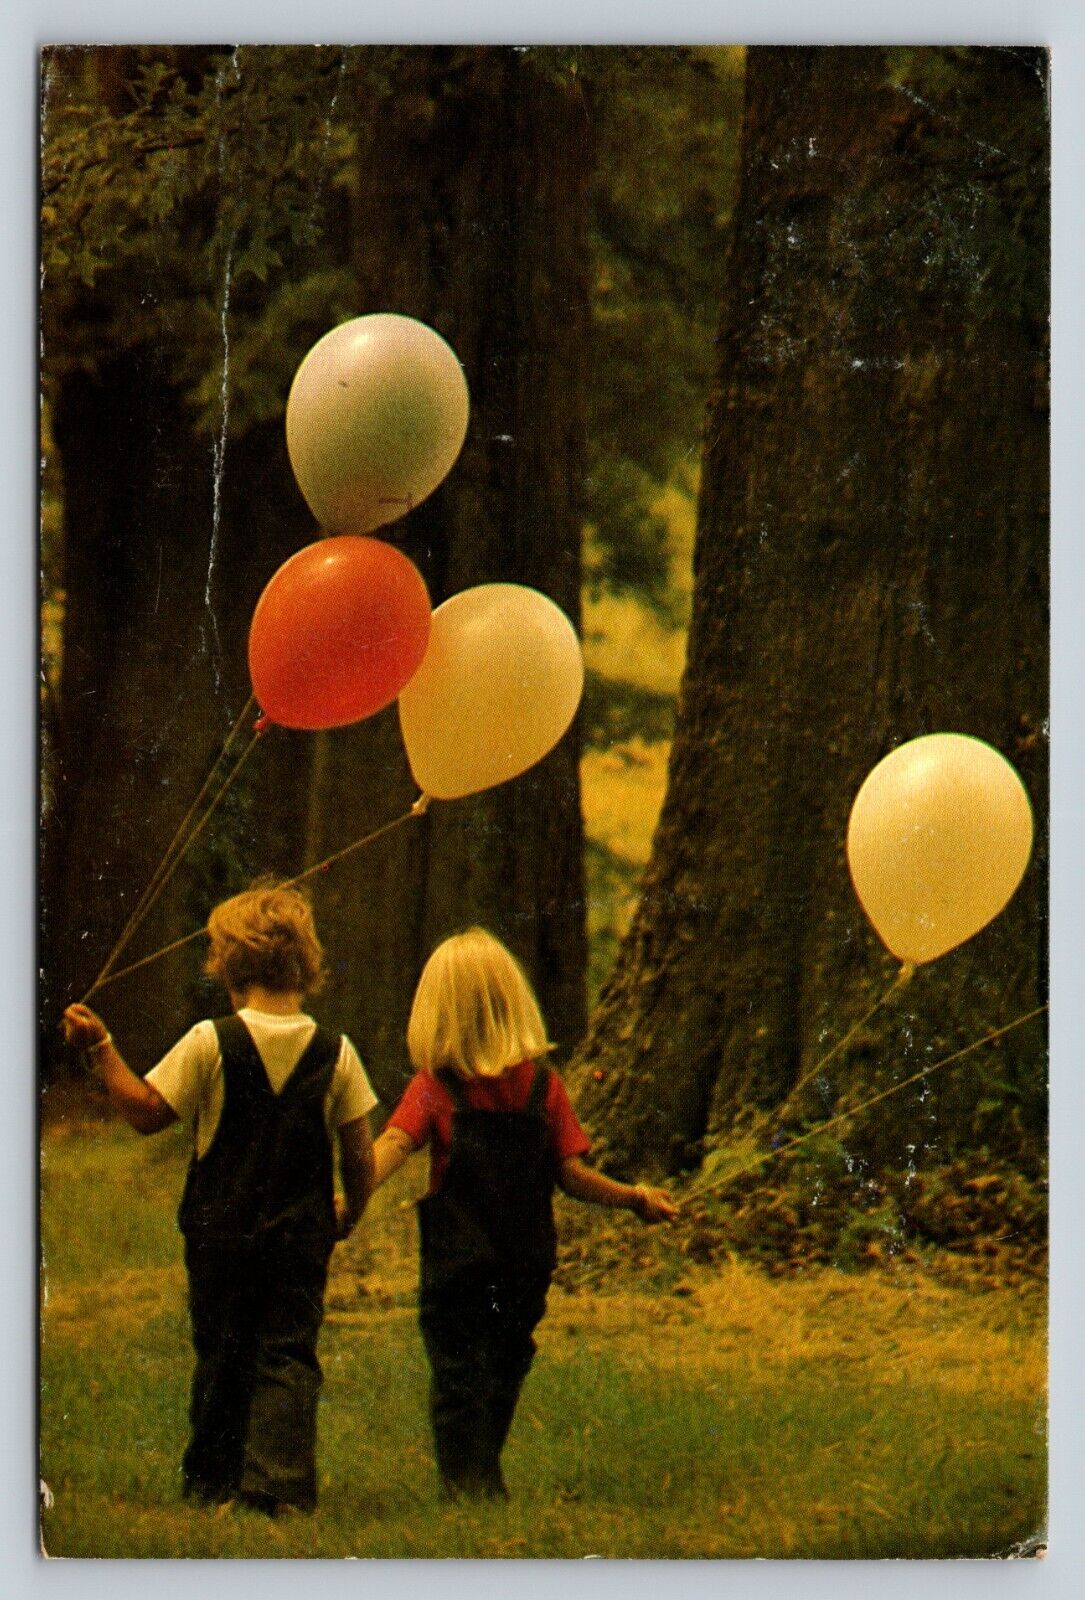 c1982 Postcard: Children In Overalls Holding Hands W/ Balloons - 4x6\